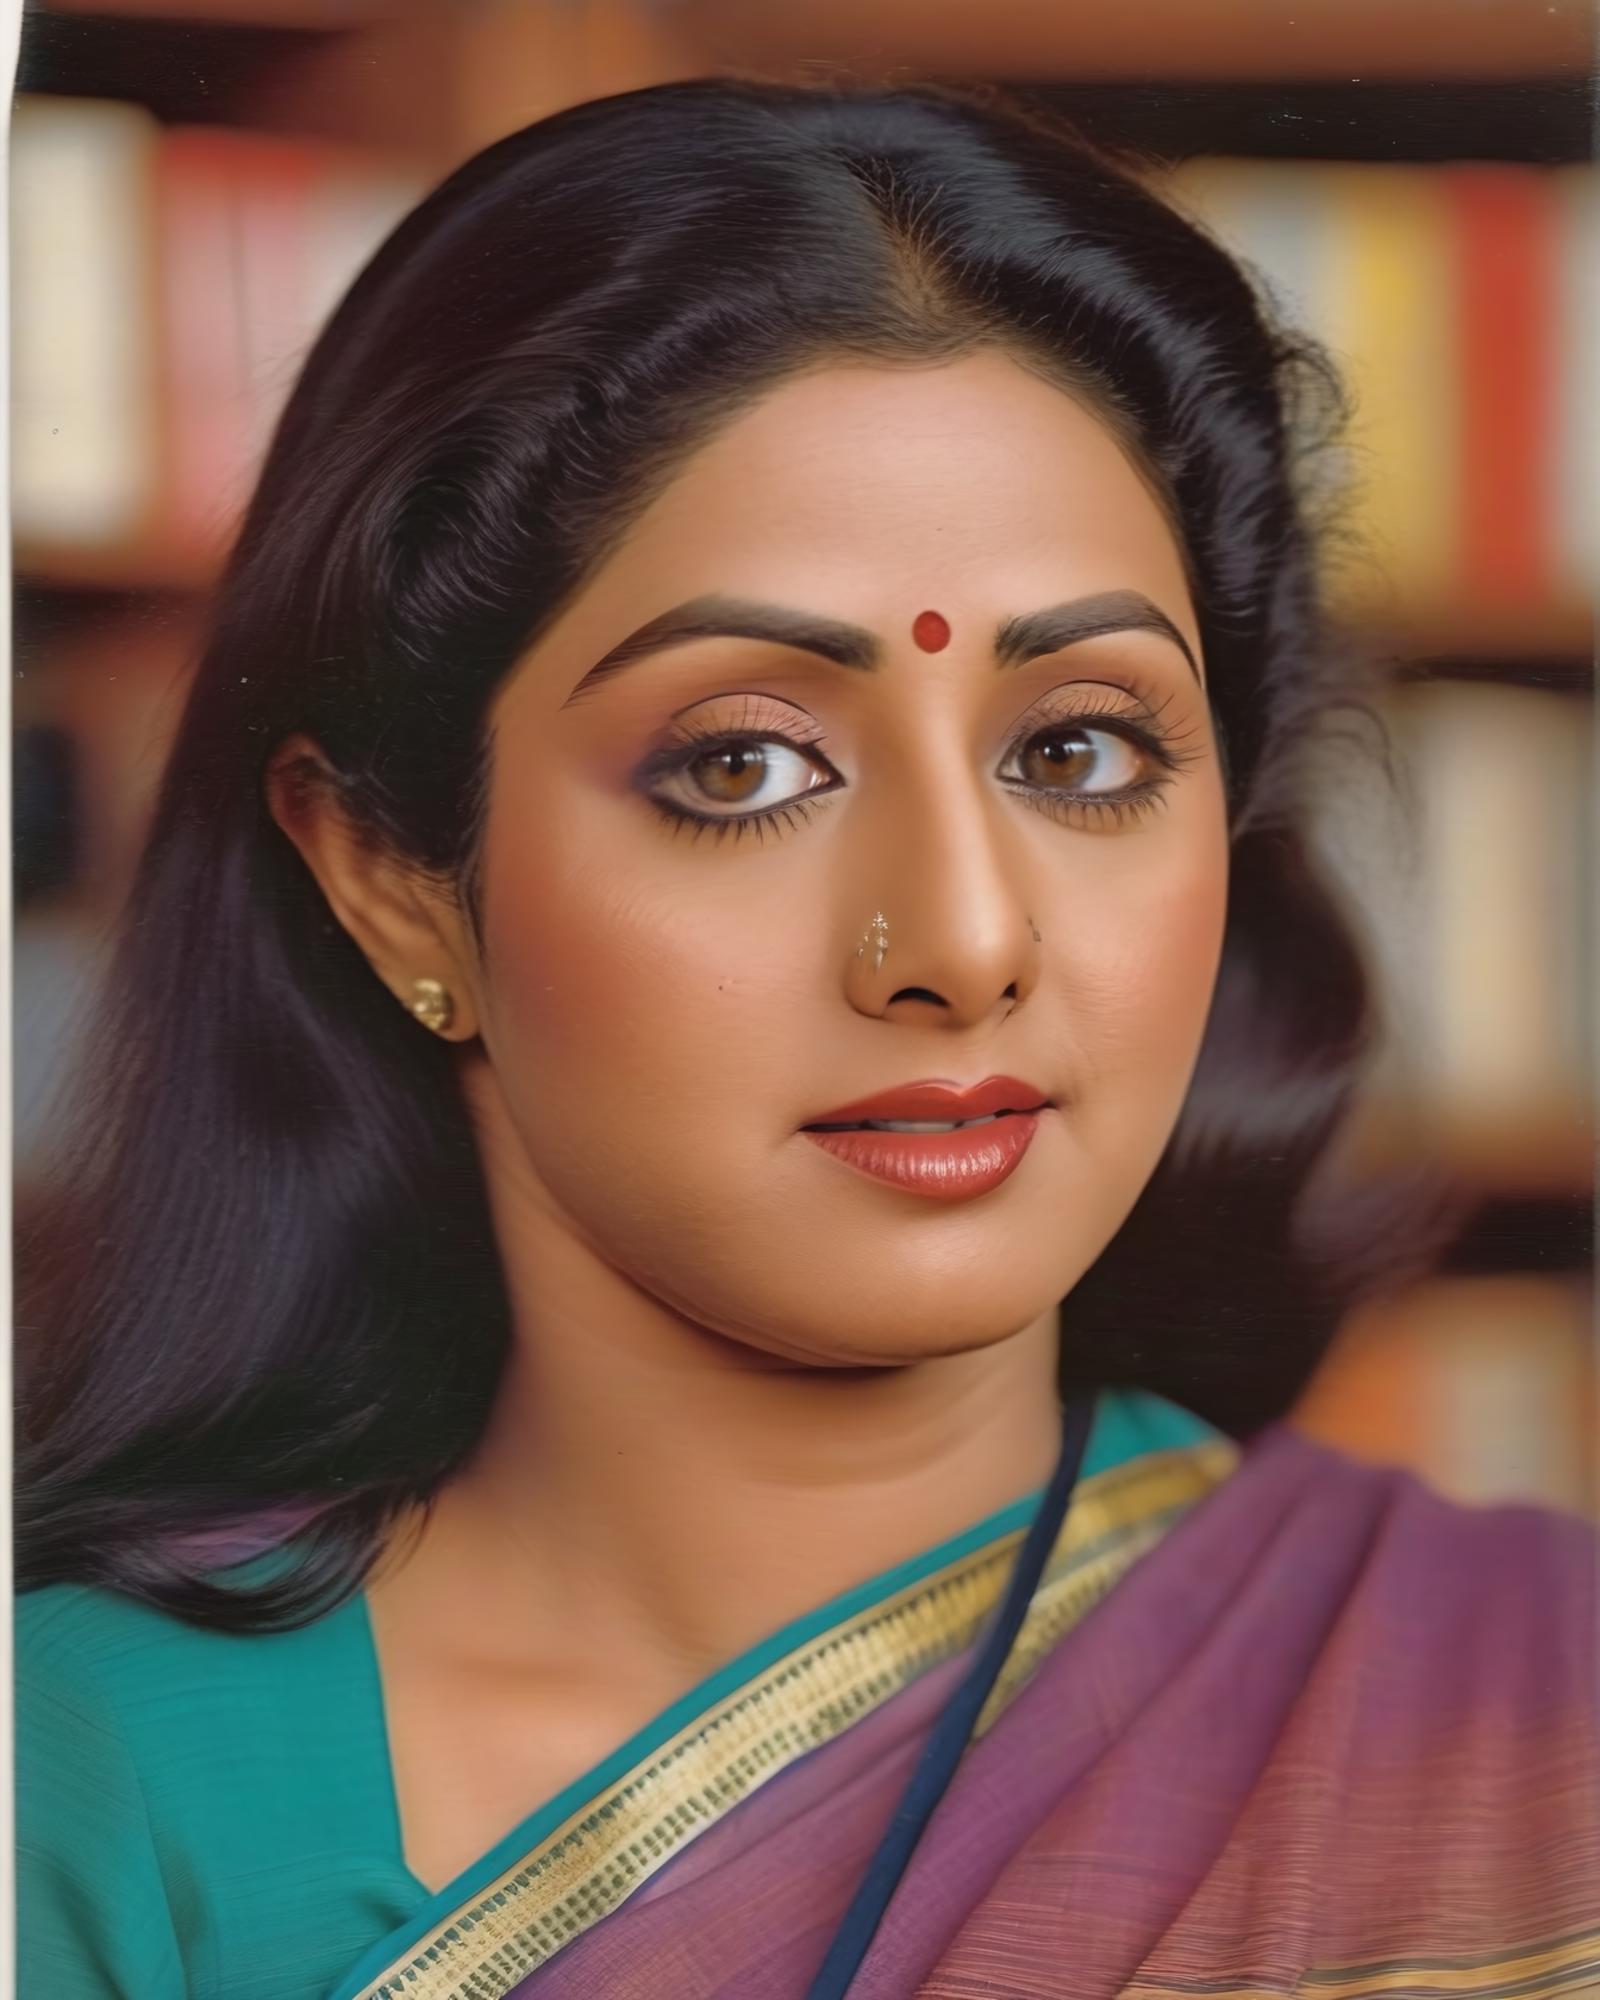 Sridevi - Indian Actress - 80s look (SDXL) image by Desi_Cafe